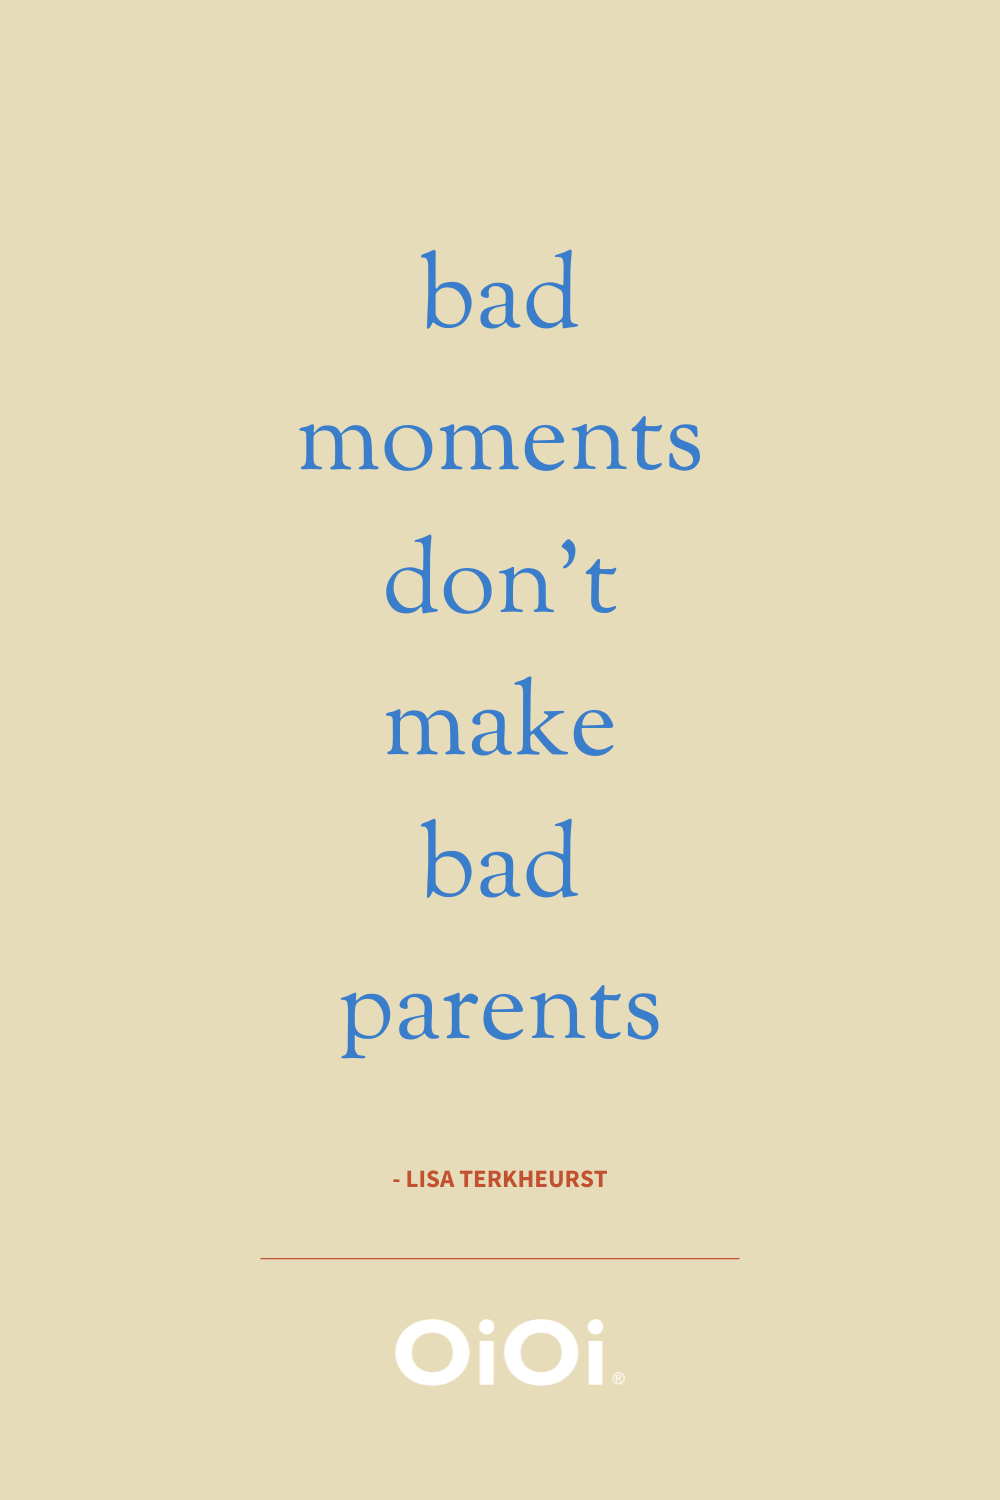 parenthood quote: bad moments don't make bad parents